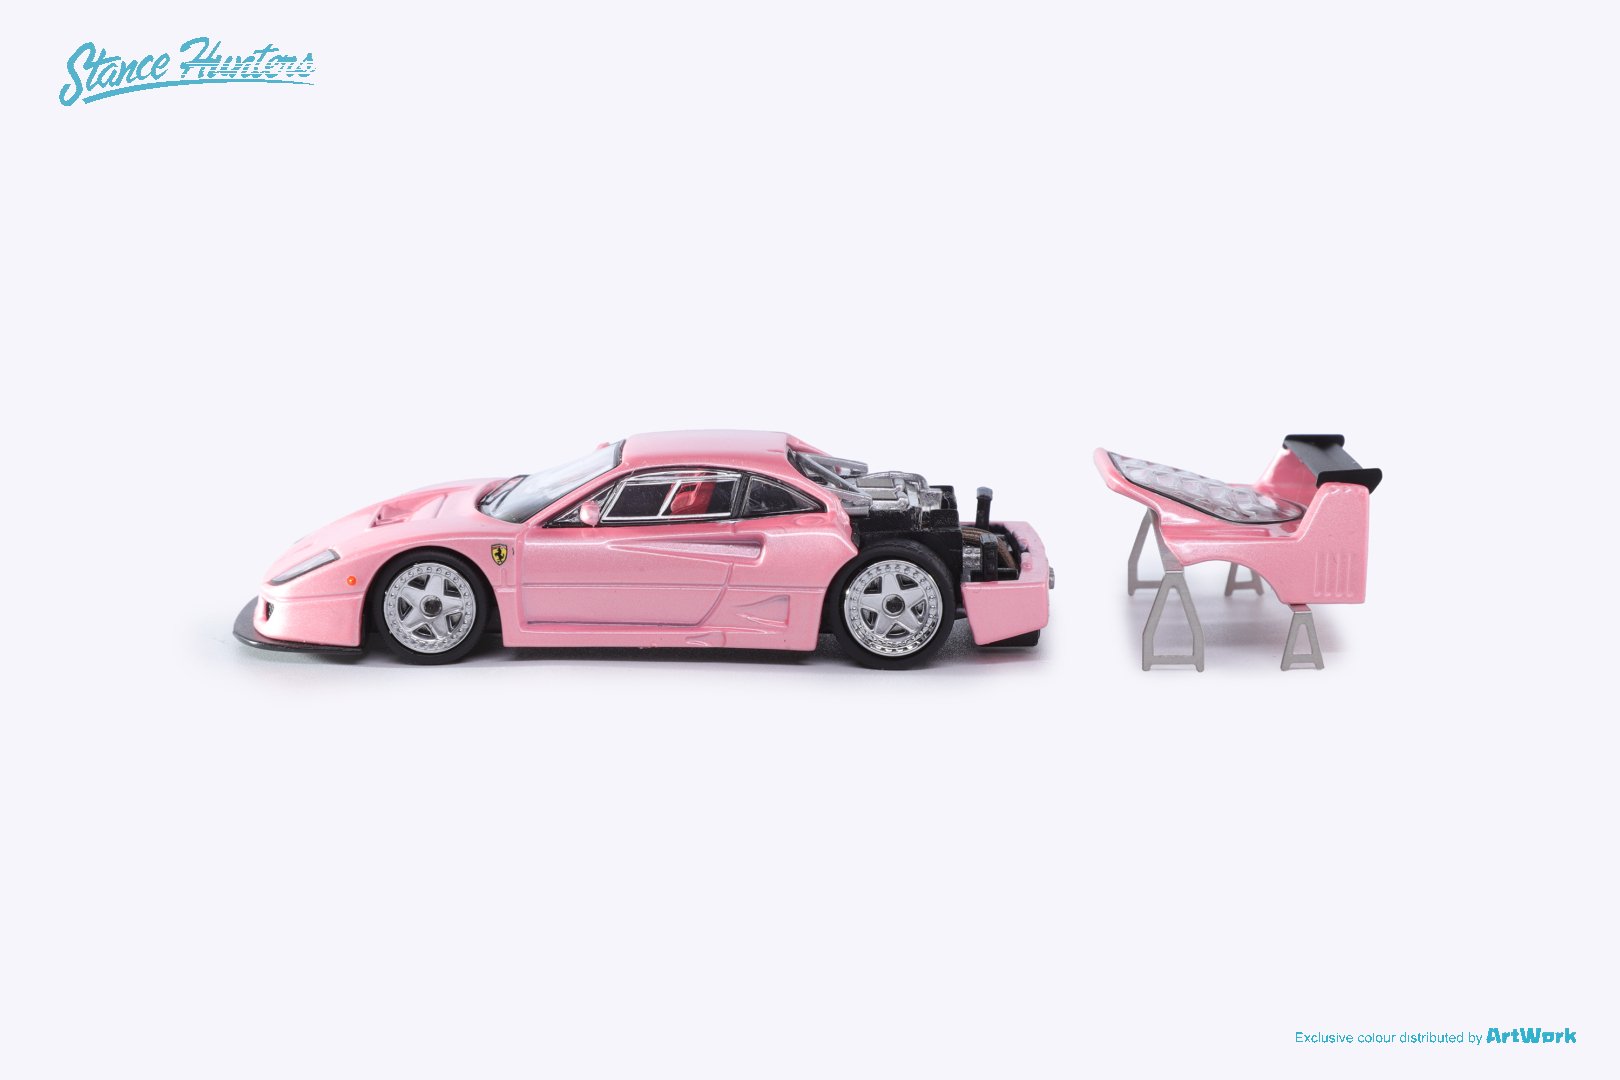 [ PREORDER ] Stance Hunters SH 1/64 Classic supercar series F40 LM diecast Model - Pink - MODEL CAR UKMODEL CAR#INNO64##TARMAC##diecast_model#